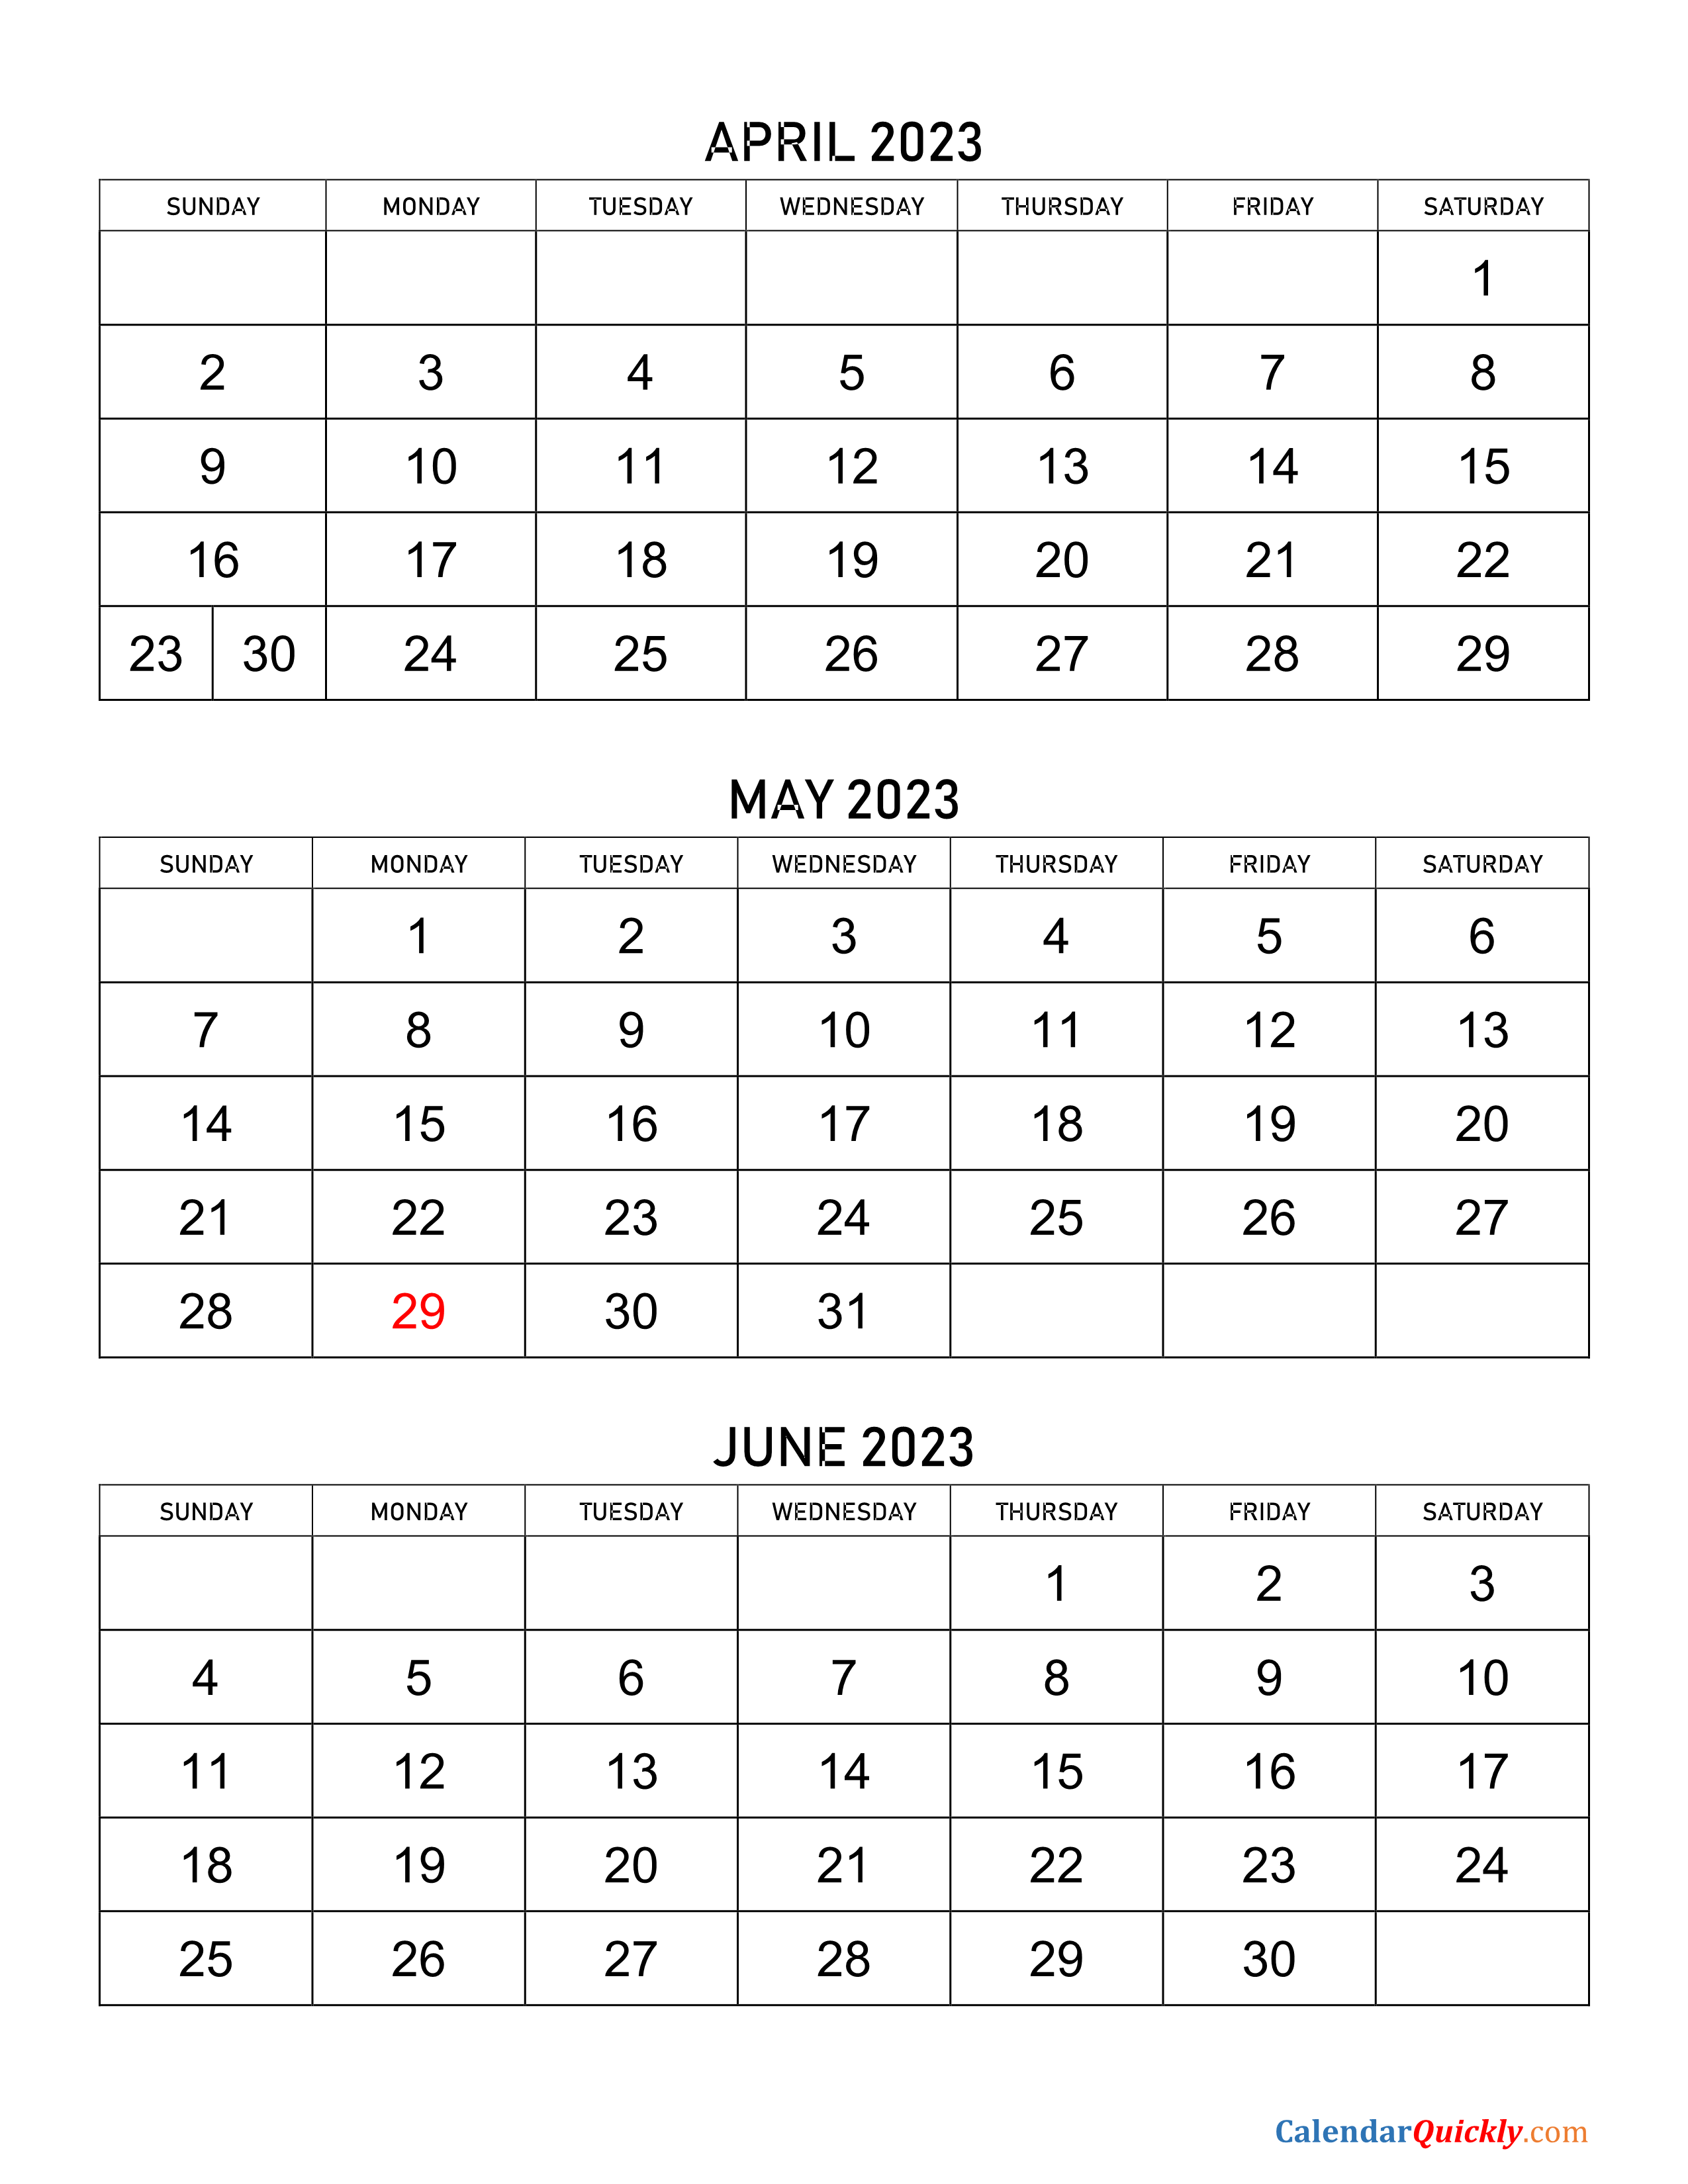 April to June 2023 Calendar Calendar Quickly